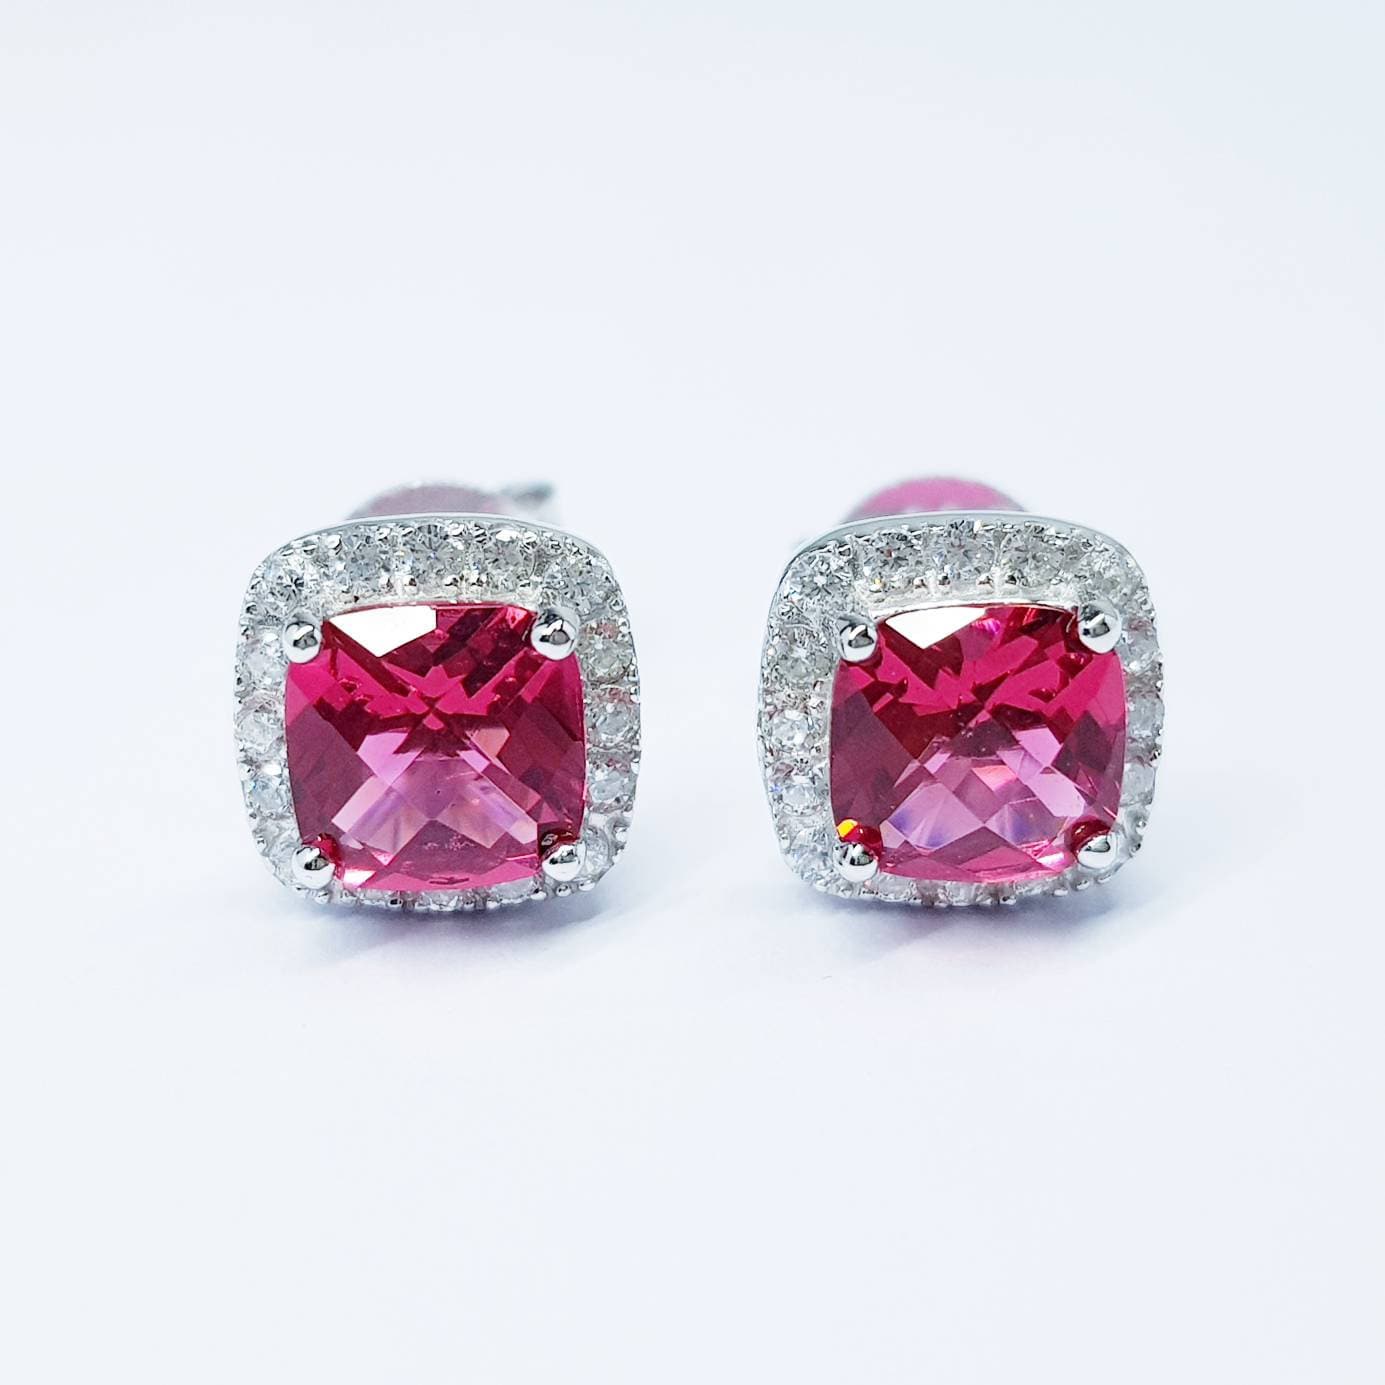 Red earrings, Ruby stud earrings, square earrings, diamond halo earrings, cushion cut earrings, bridesmaid earrings, July stone